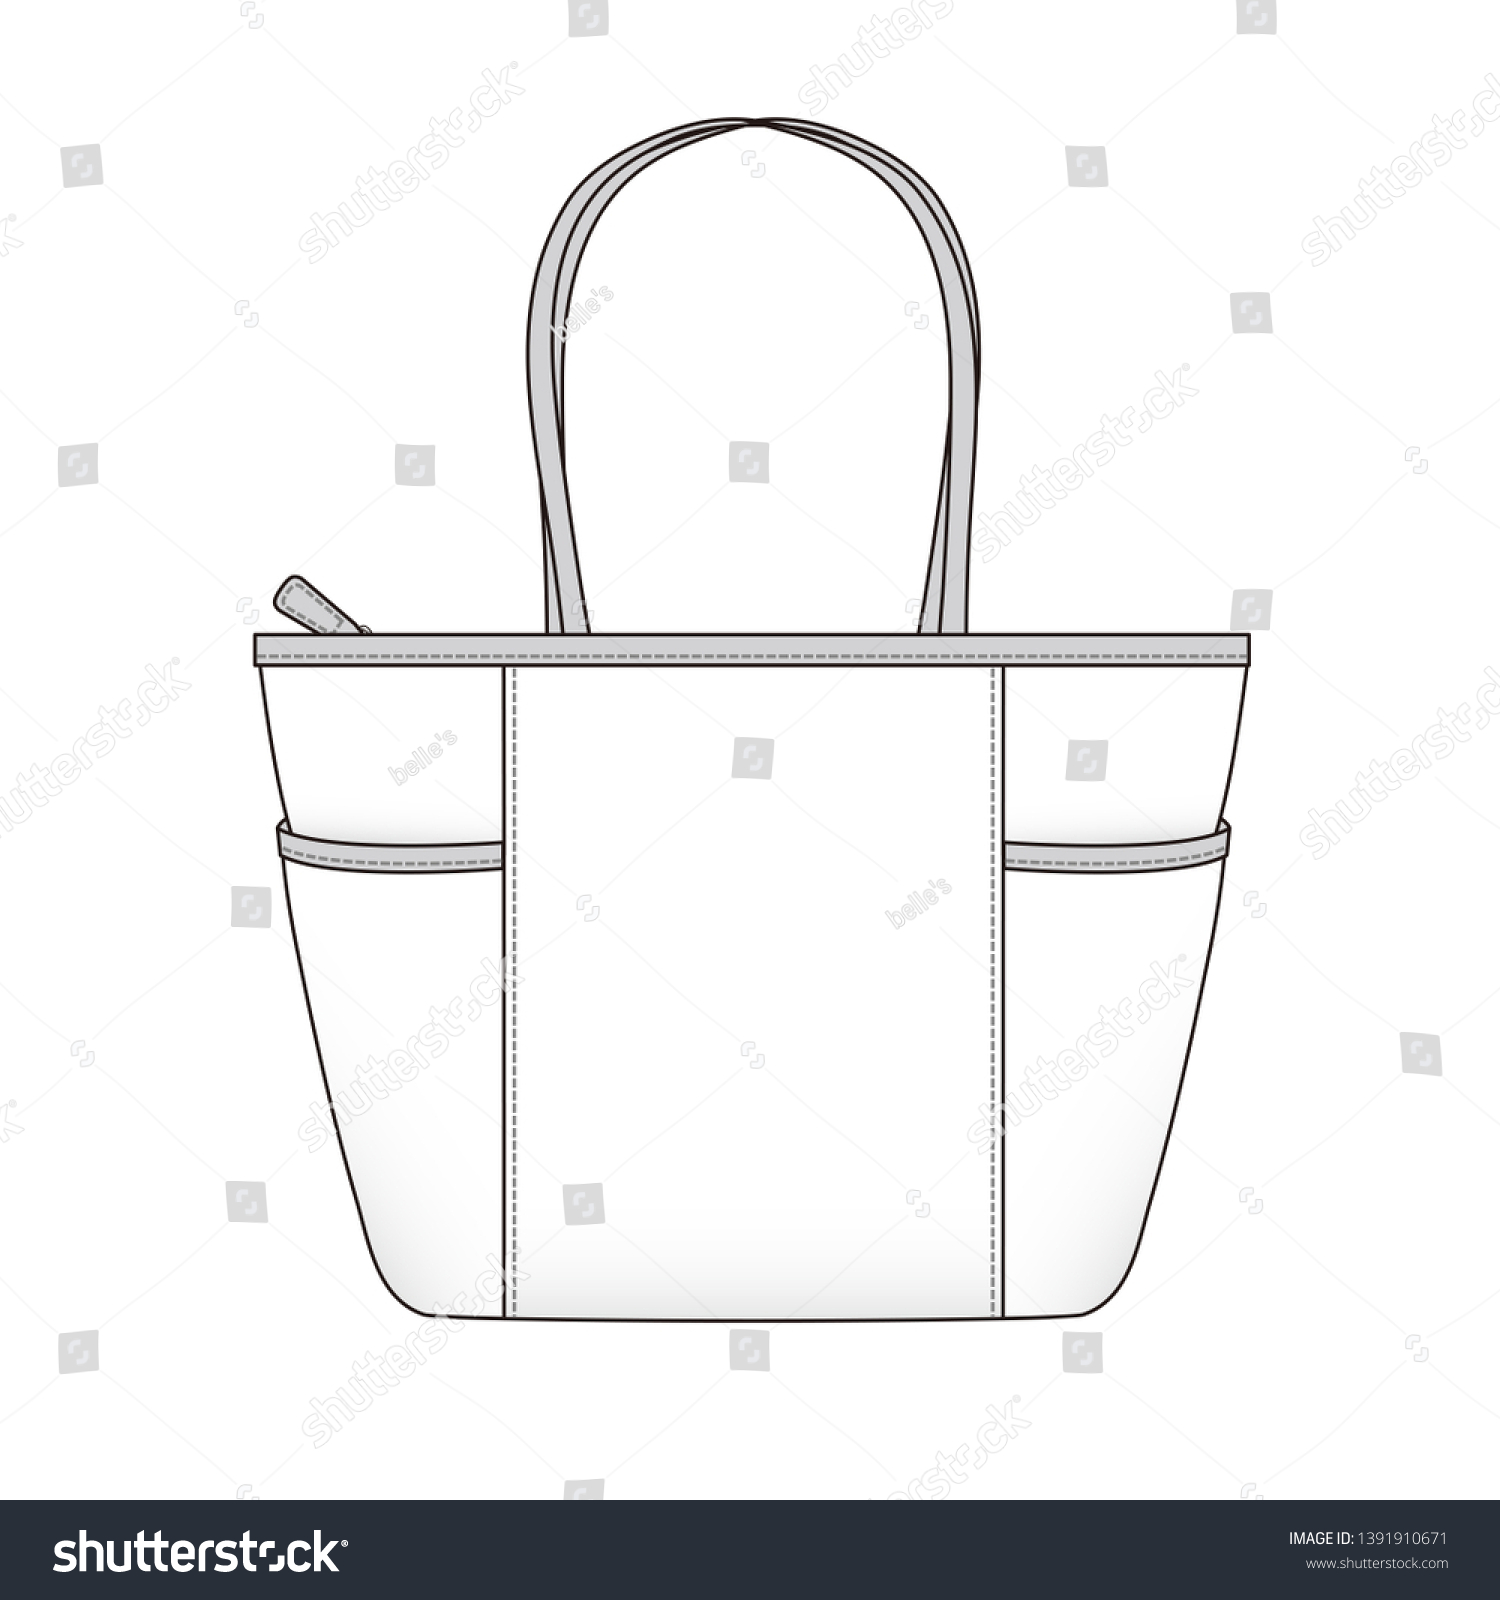 SVG of Shopping Tote Bag with side pockets, bag design outline vector illustration sketch template isolated on white background svg